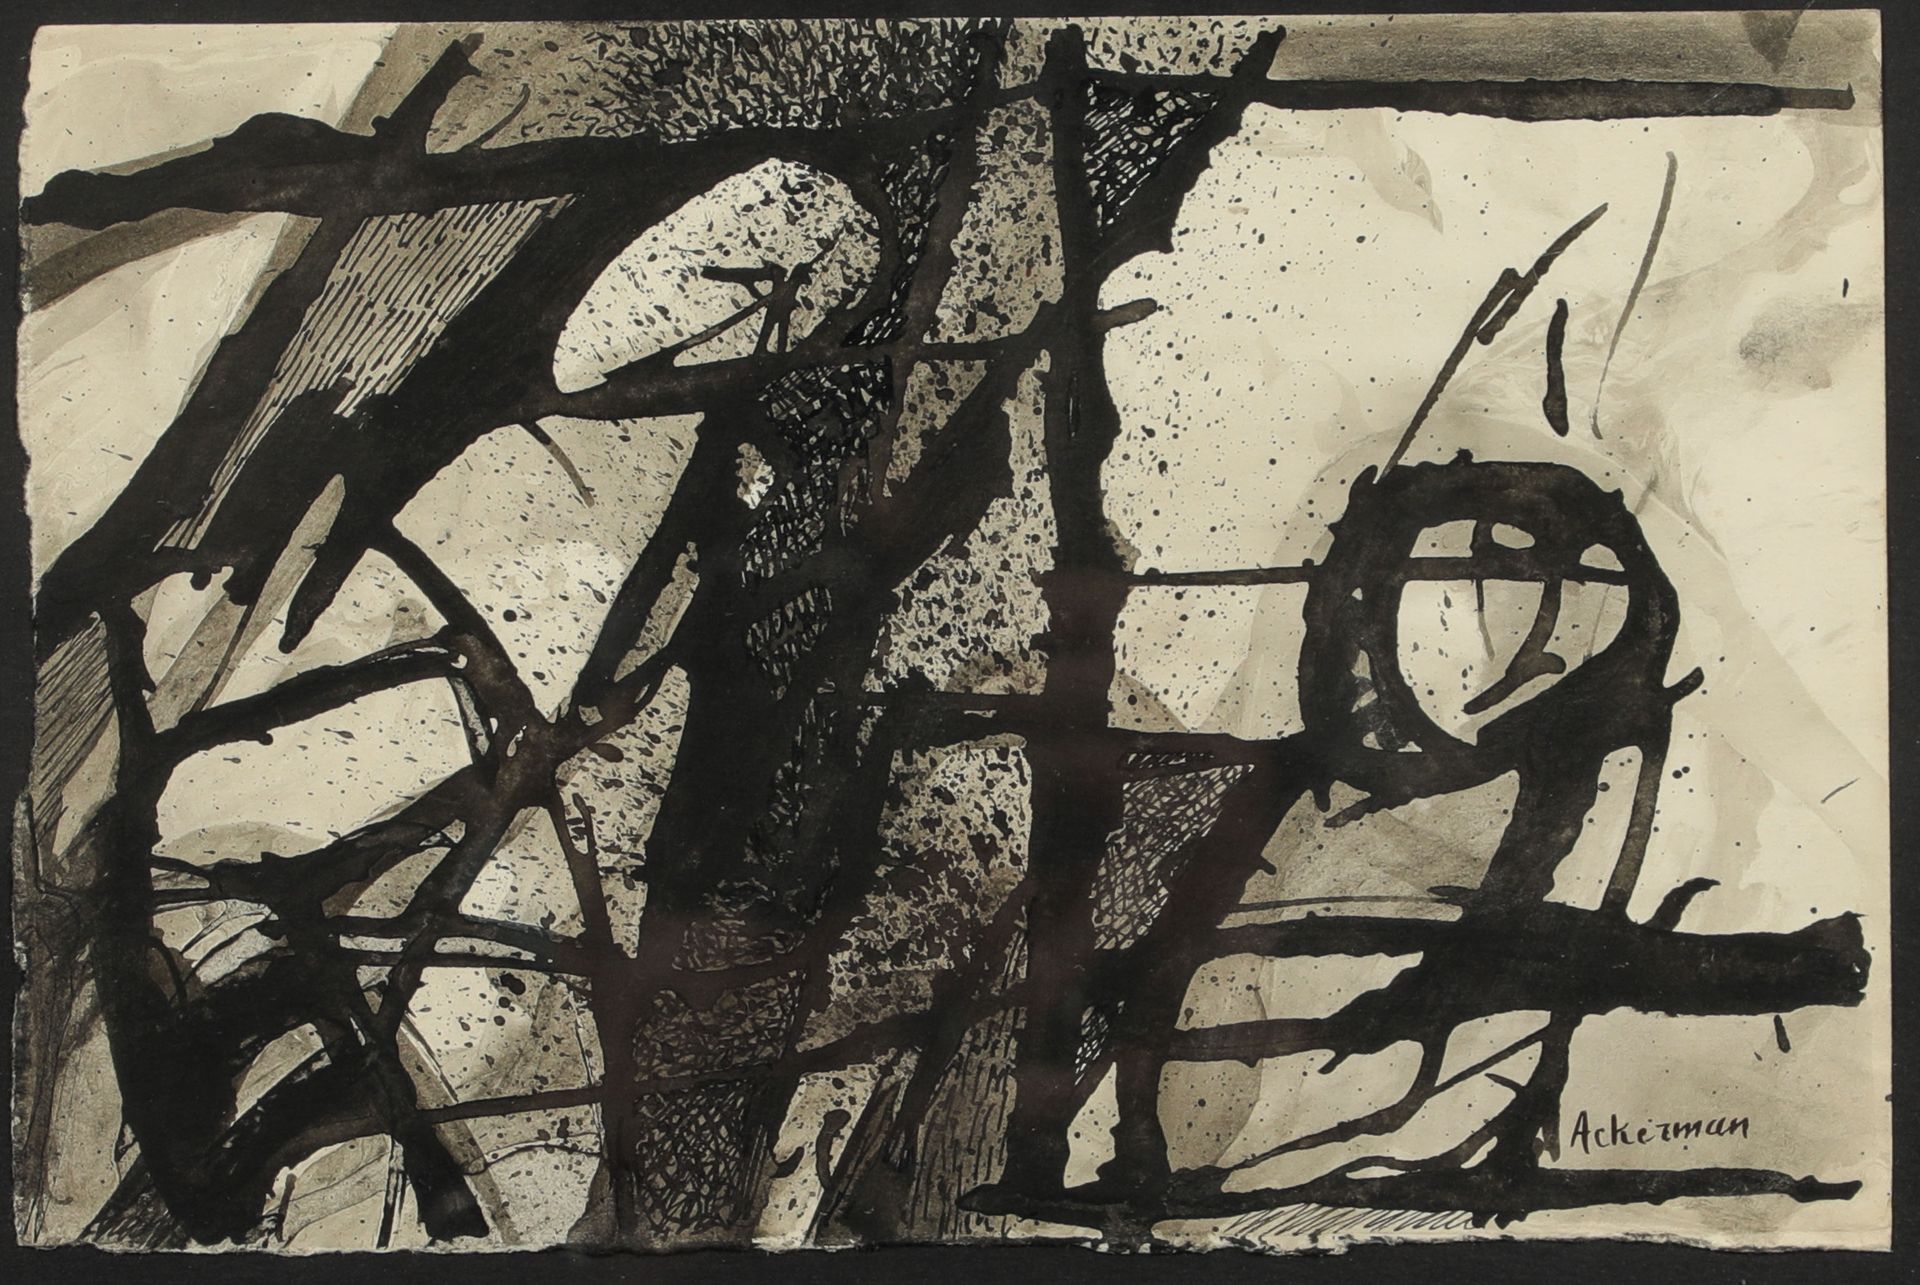 Null Paul ACKERMAN (1908-1981) 创作 纸上水墨，右下角签名 16.5 x 25 cm